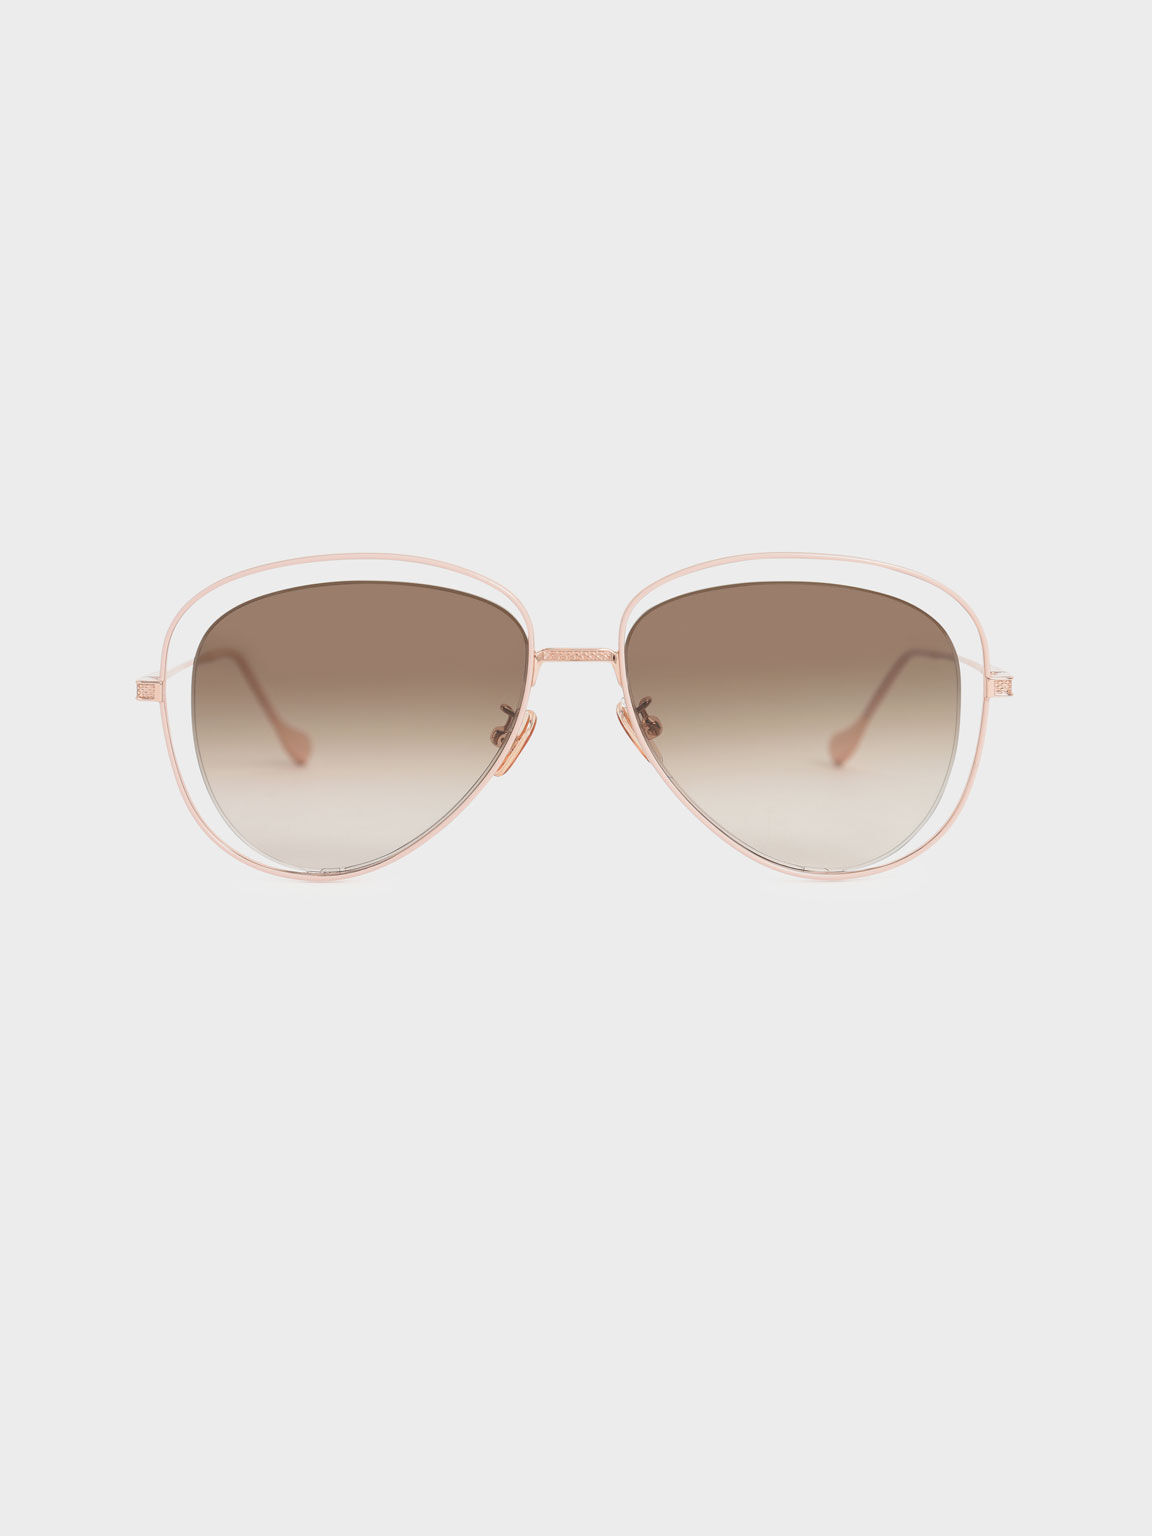 Cut-Out Aviator Sunglasses, Rose Gold, hi-res